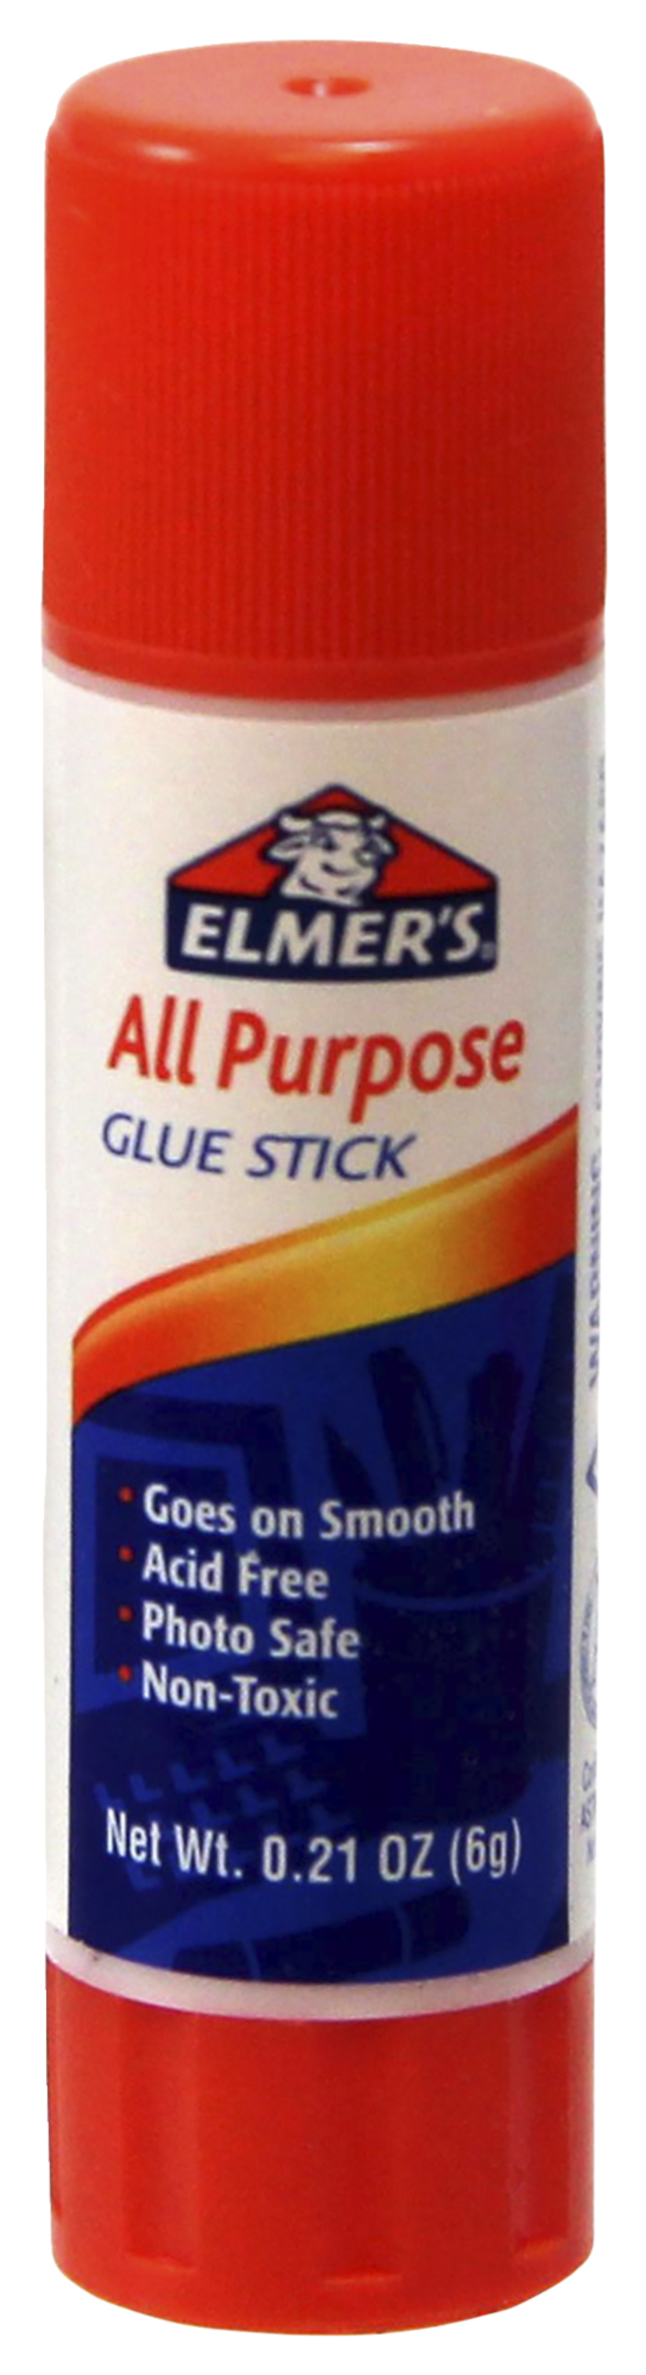 Elmer's® All-Purpose School Glue Stick Classroom Pack